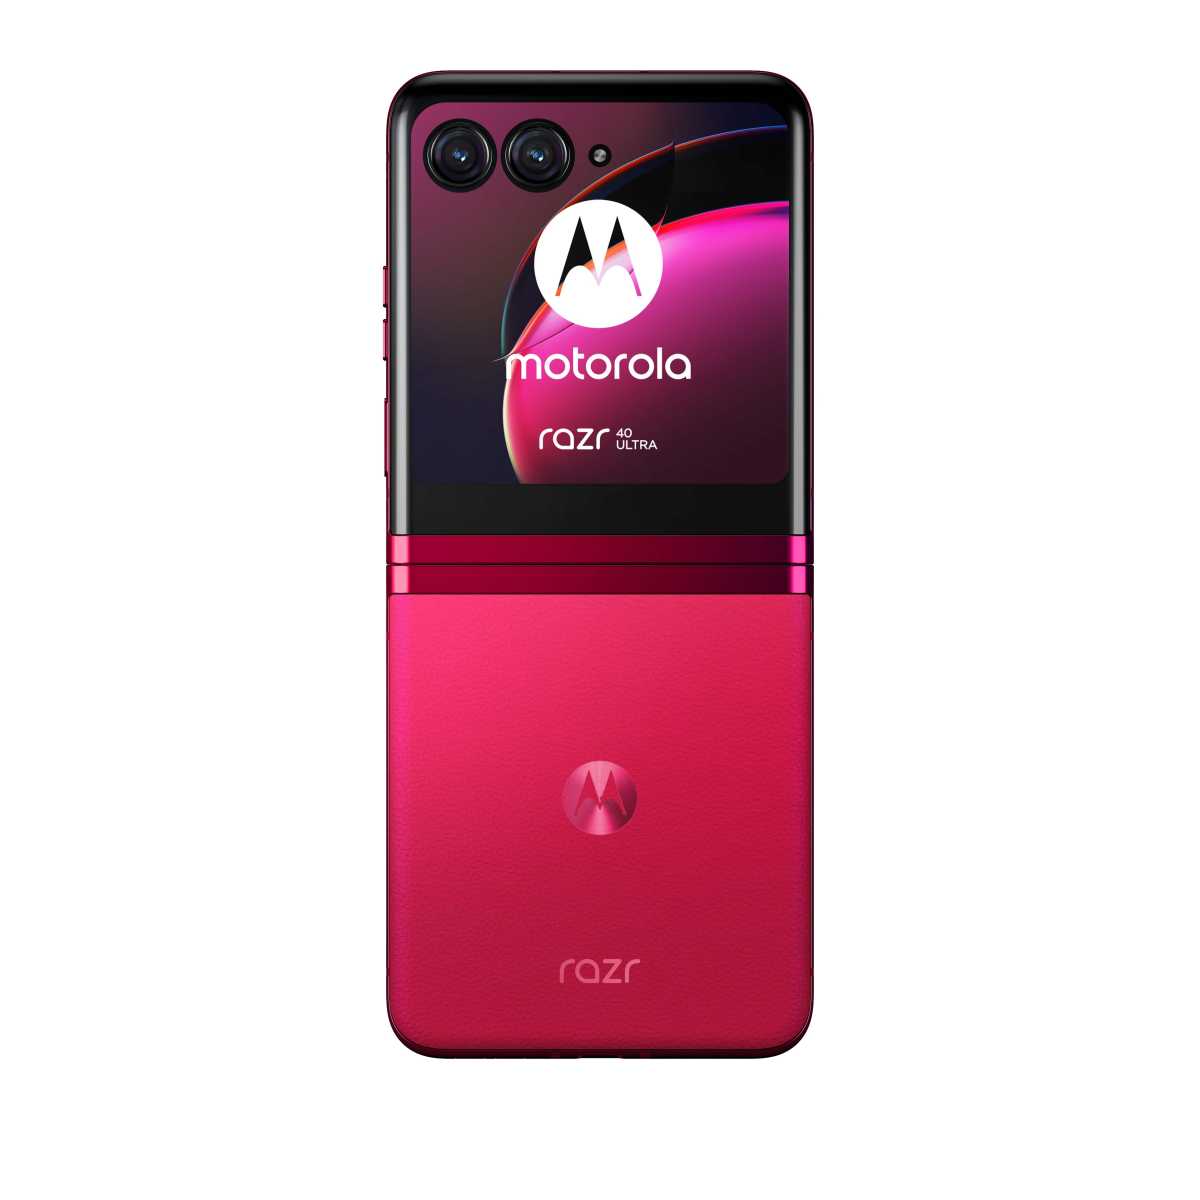 Motorola Razr 40 Ultra leaked renders